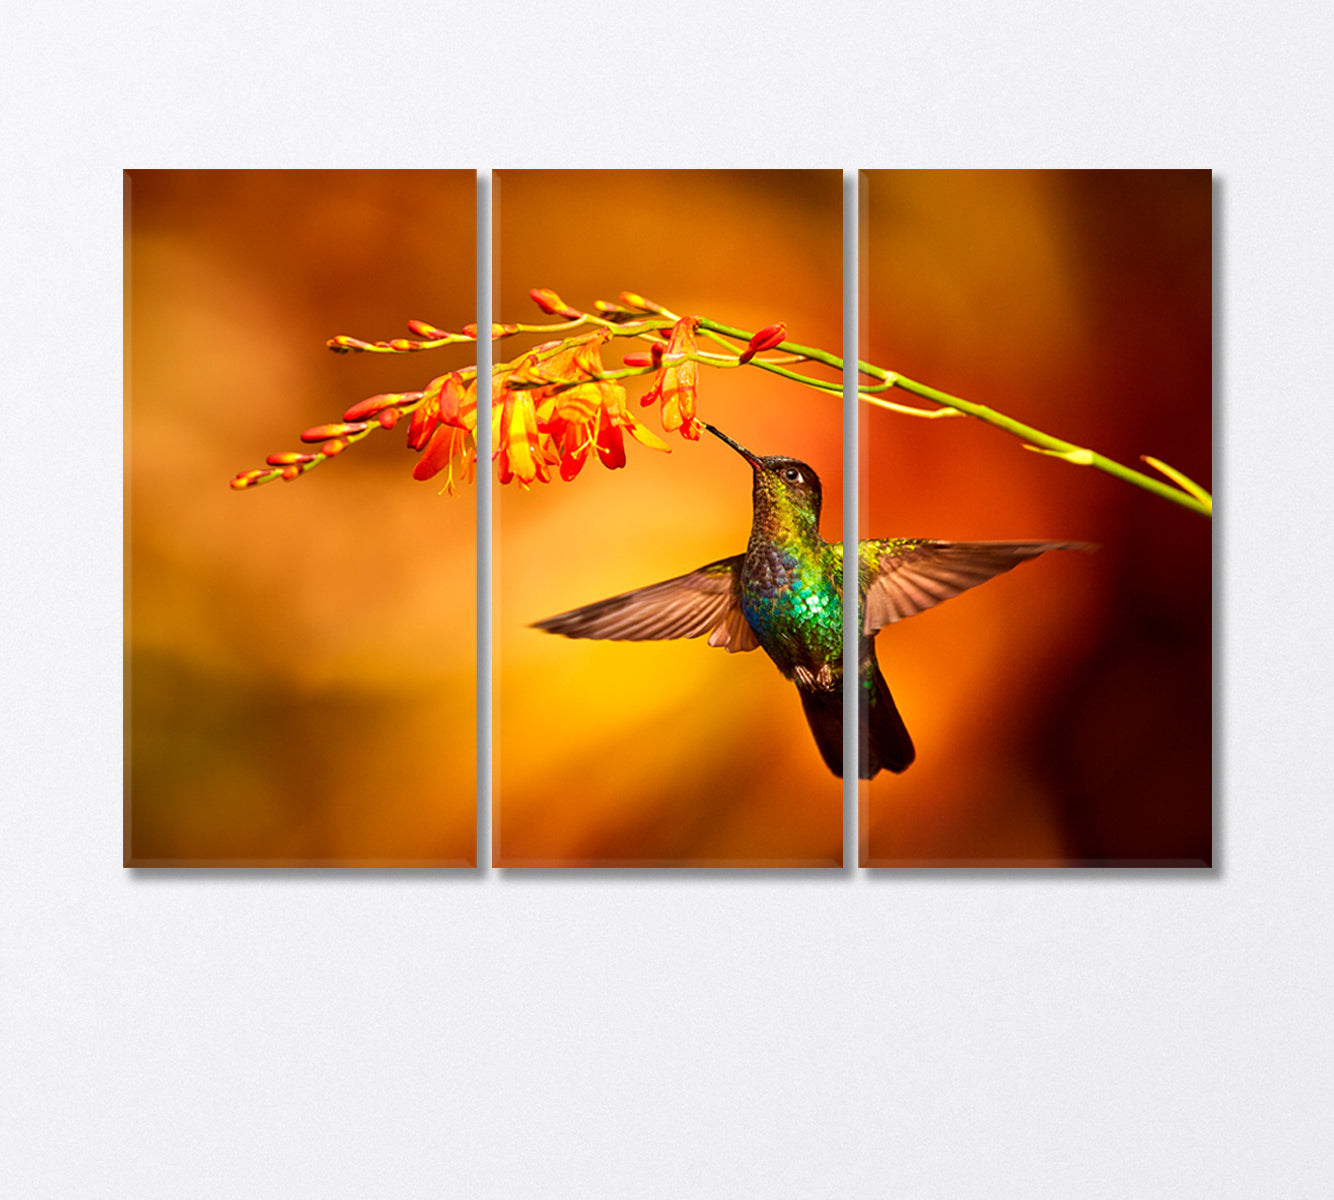 Hummingbird Collecting Nectar Canvas Print-Canvas Print-CetArt-3 Panels-36x24 inches-CetArt